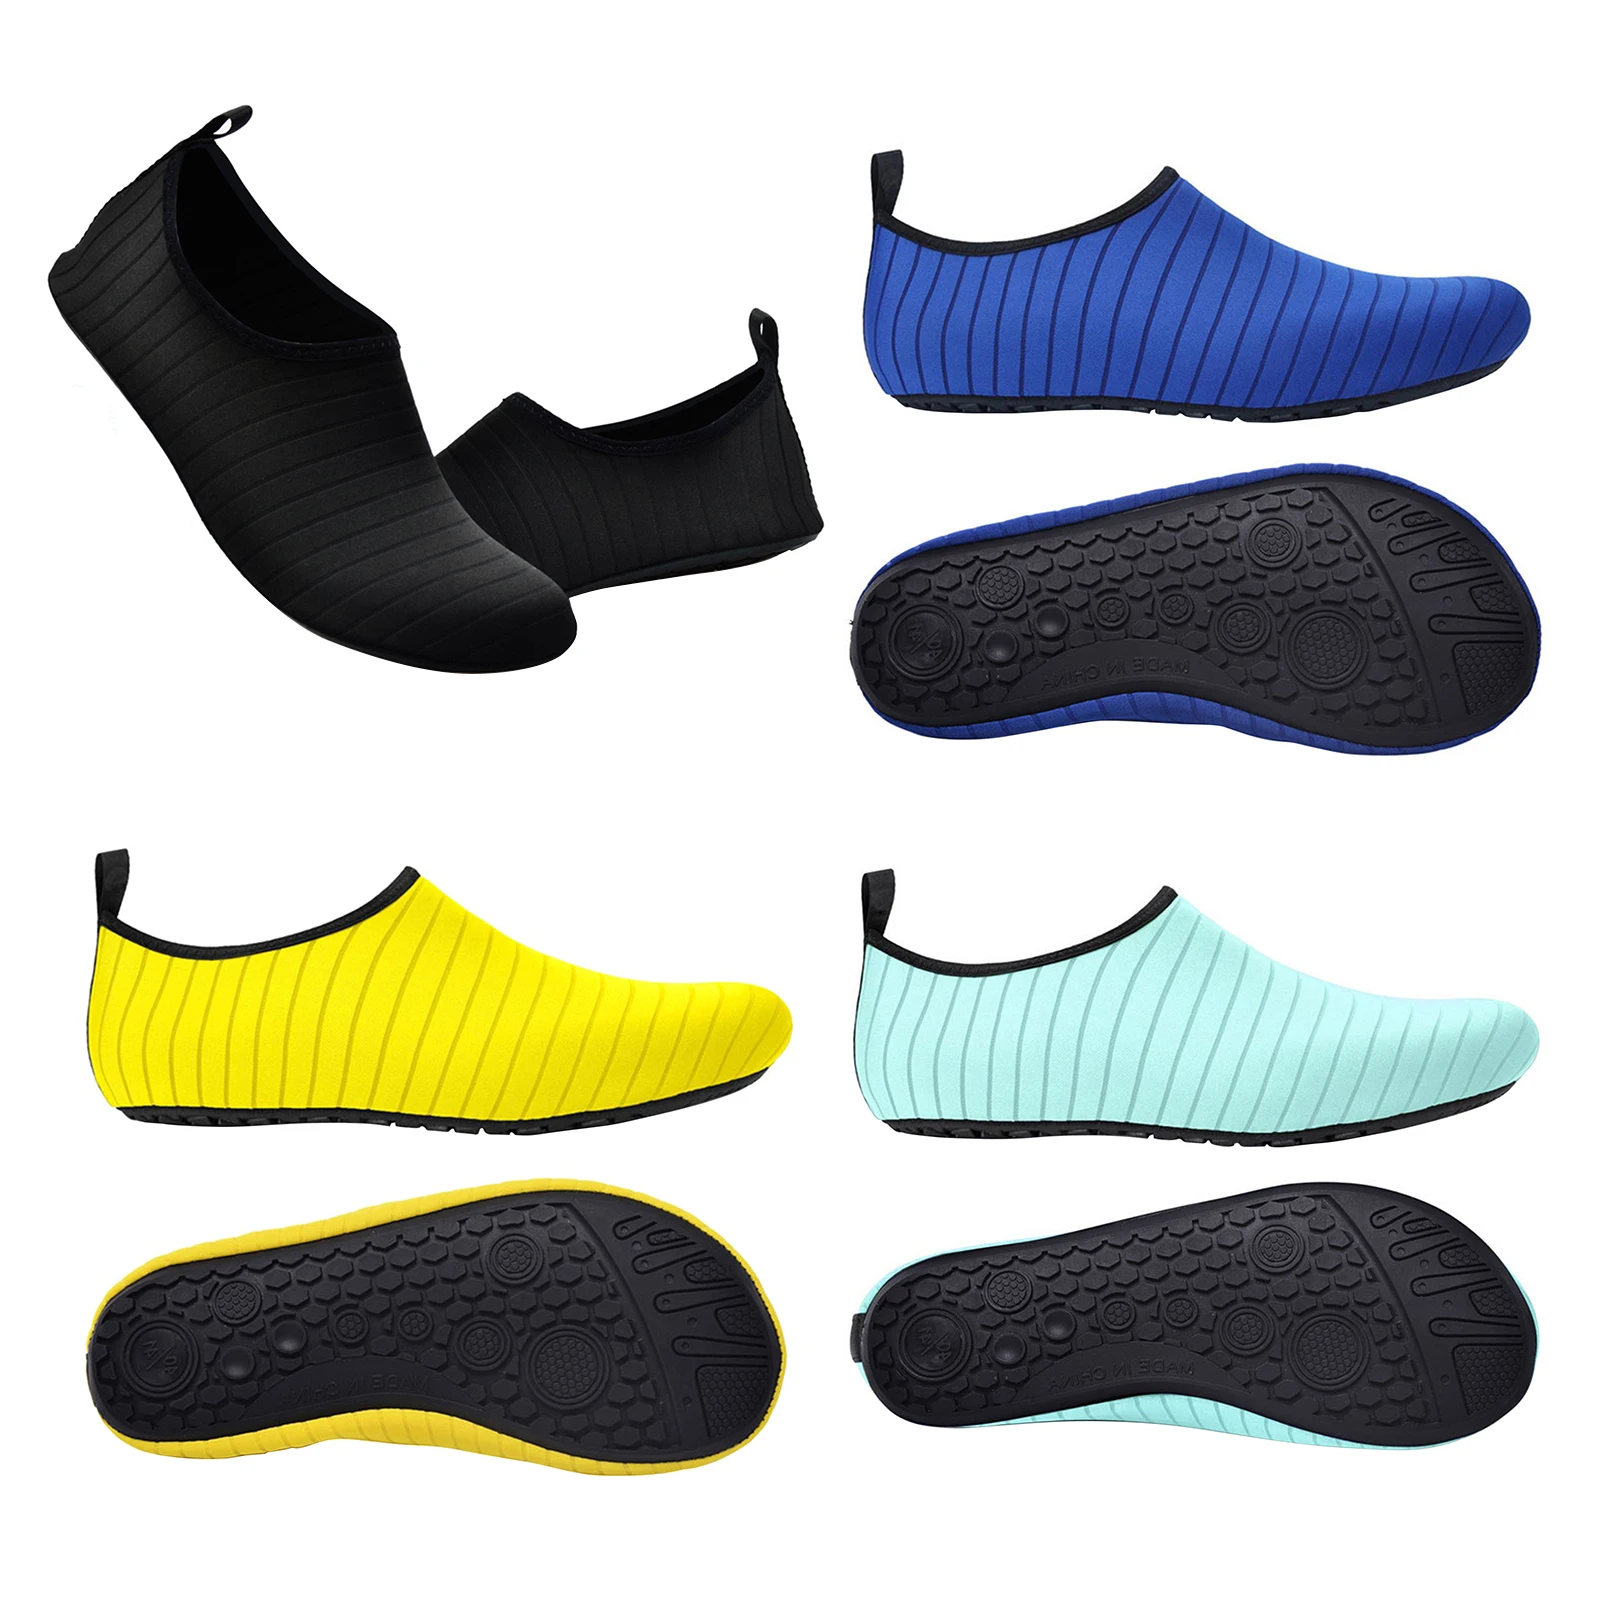 Freely New Barefoot Water Skin Shoes Aqua Socks for Beach Swim Surf Yoga Exercise 